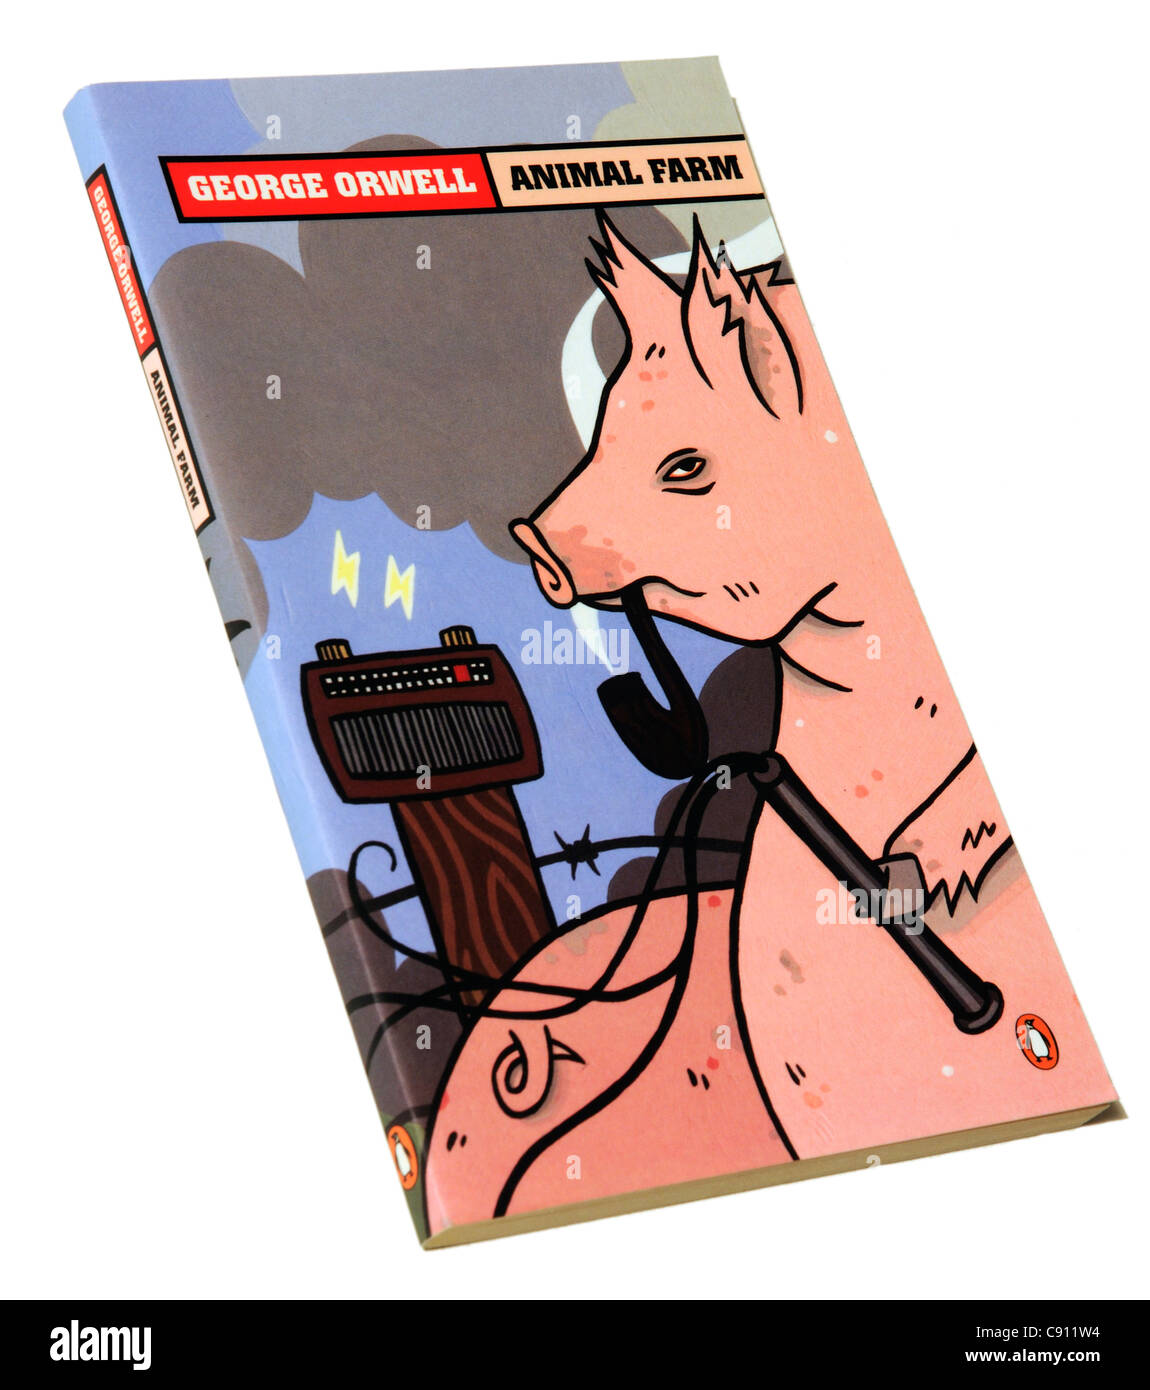 Animal Farm by George Orwell Stock Photo